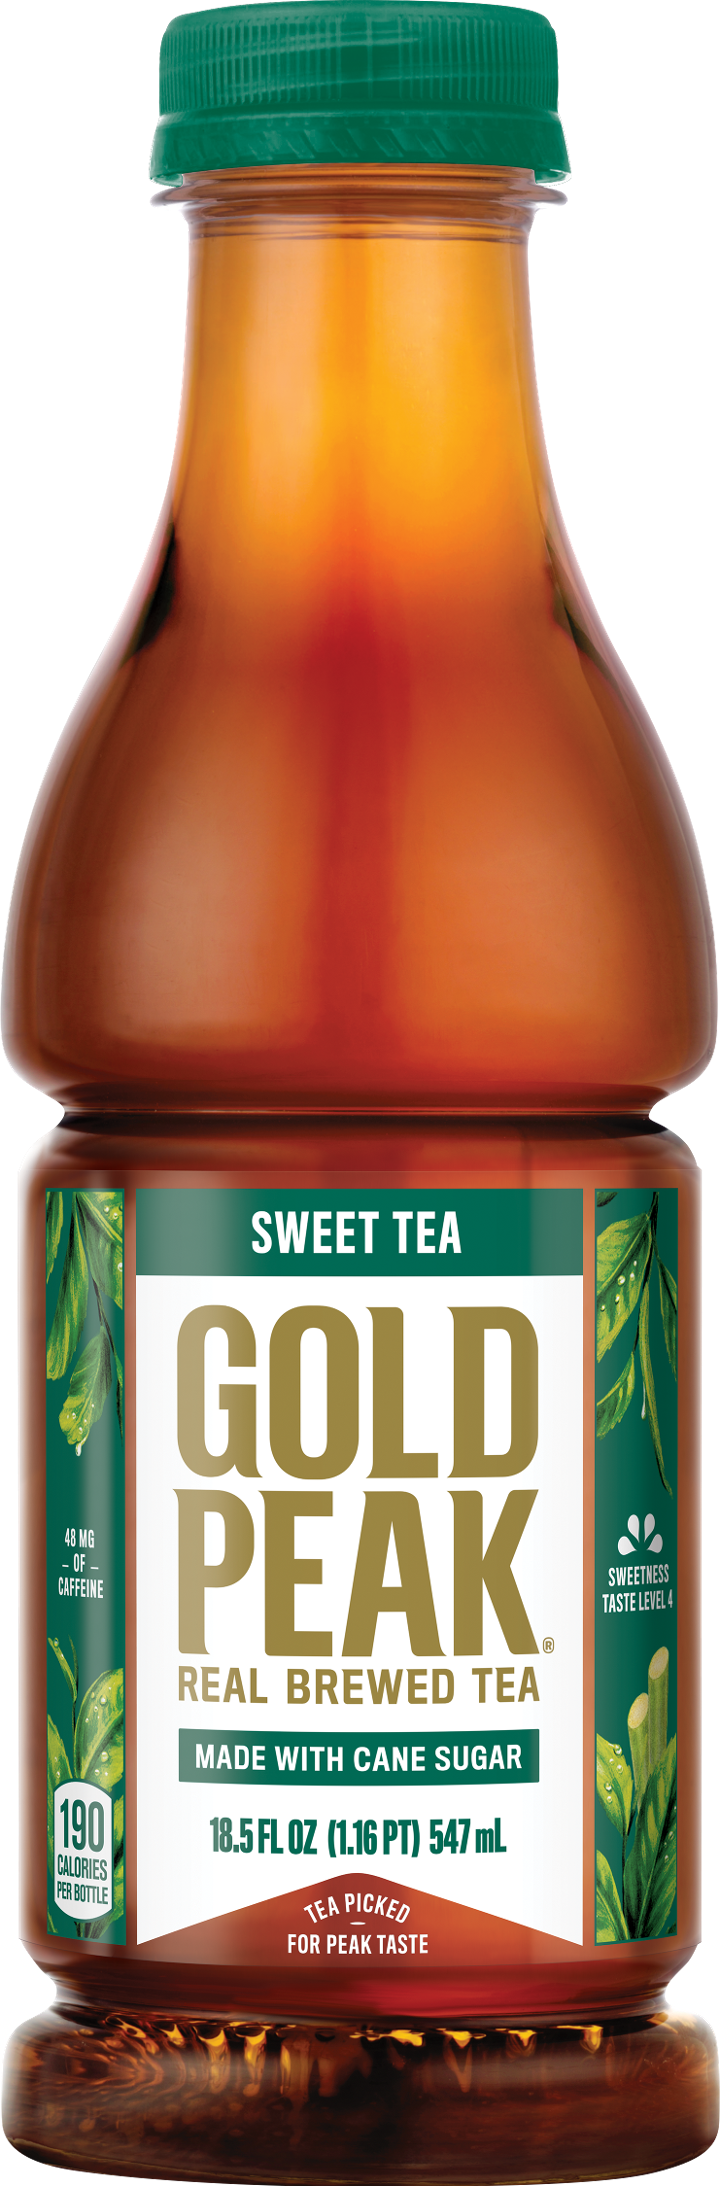 18.5 oz gold peak raspberry tea